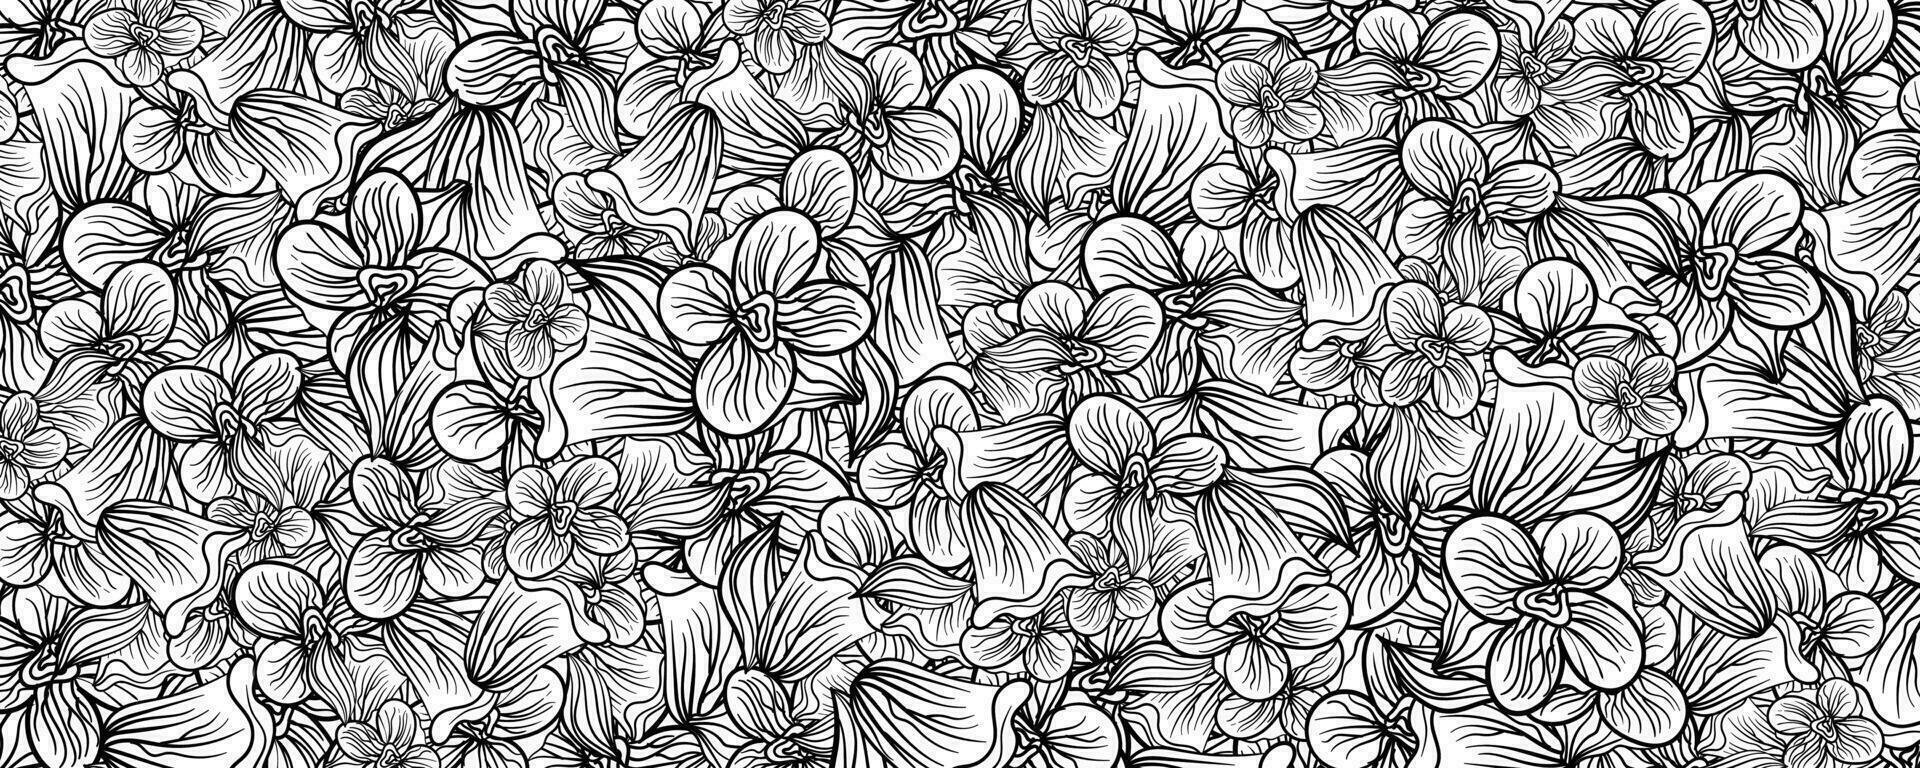 Abstract black white coloring leaf floral flower pattern vector background illustration